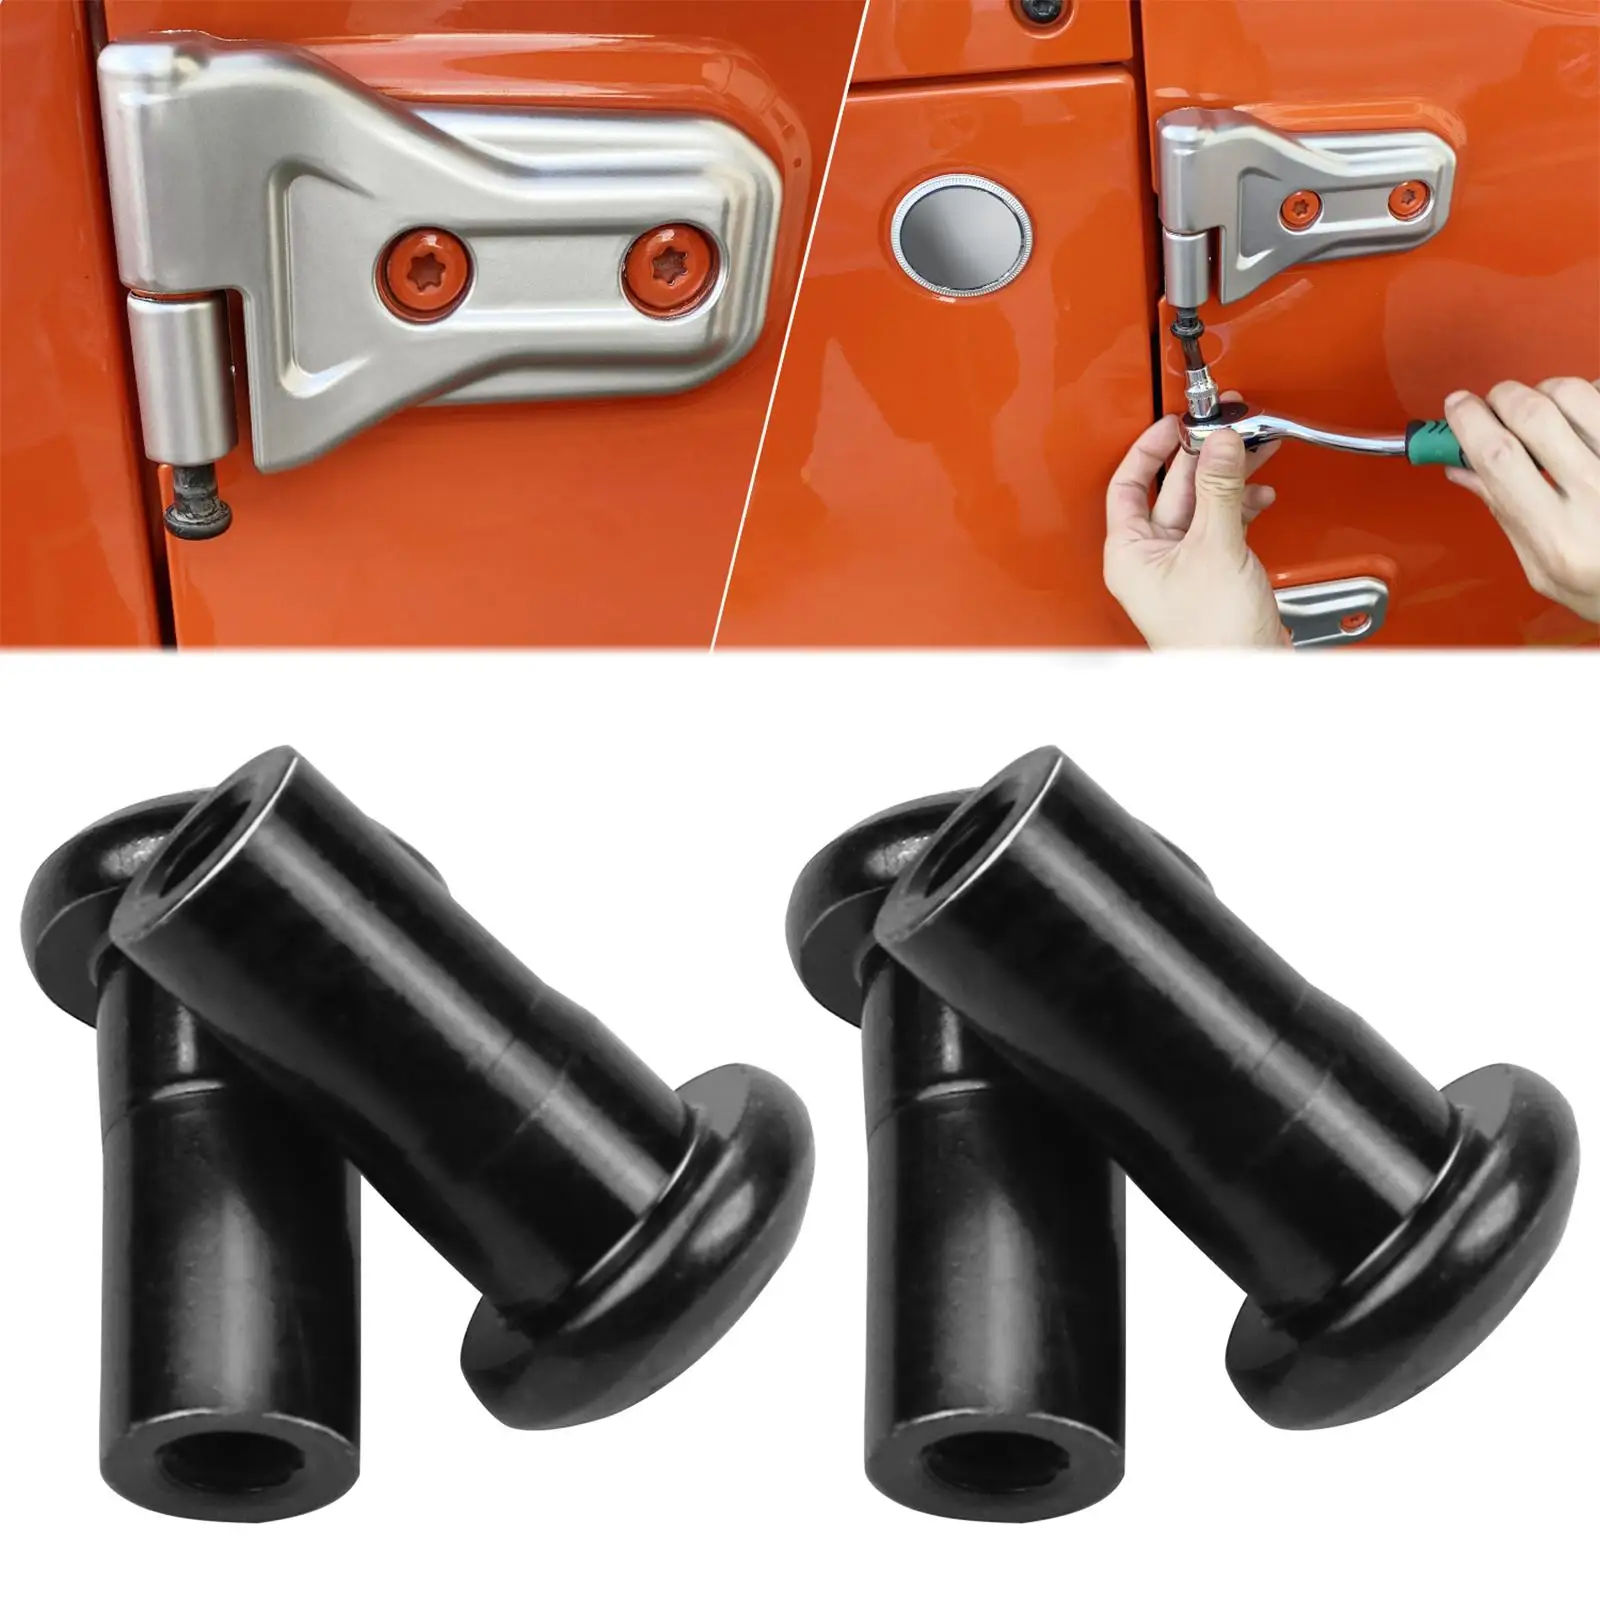 4x Door Hinge Nuts Anti Rust Hinge Lock Replacement Corrosion Resistance for Jeep Wrangler JK Jku JL Rubicon Jlu 2007-2021